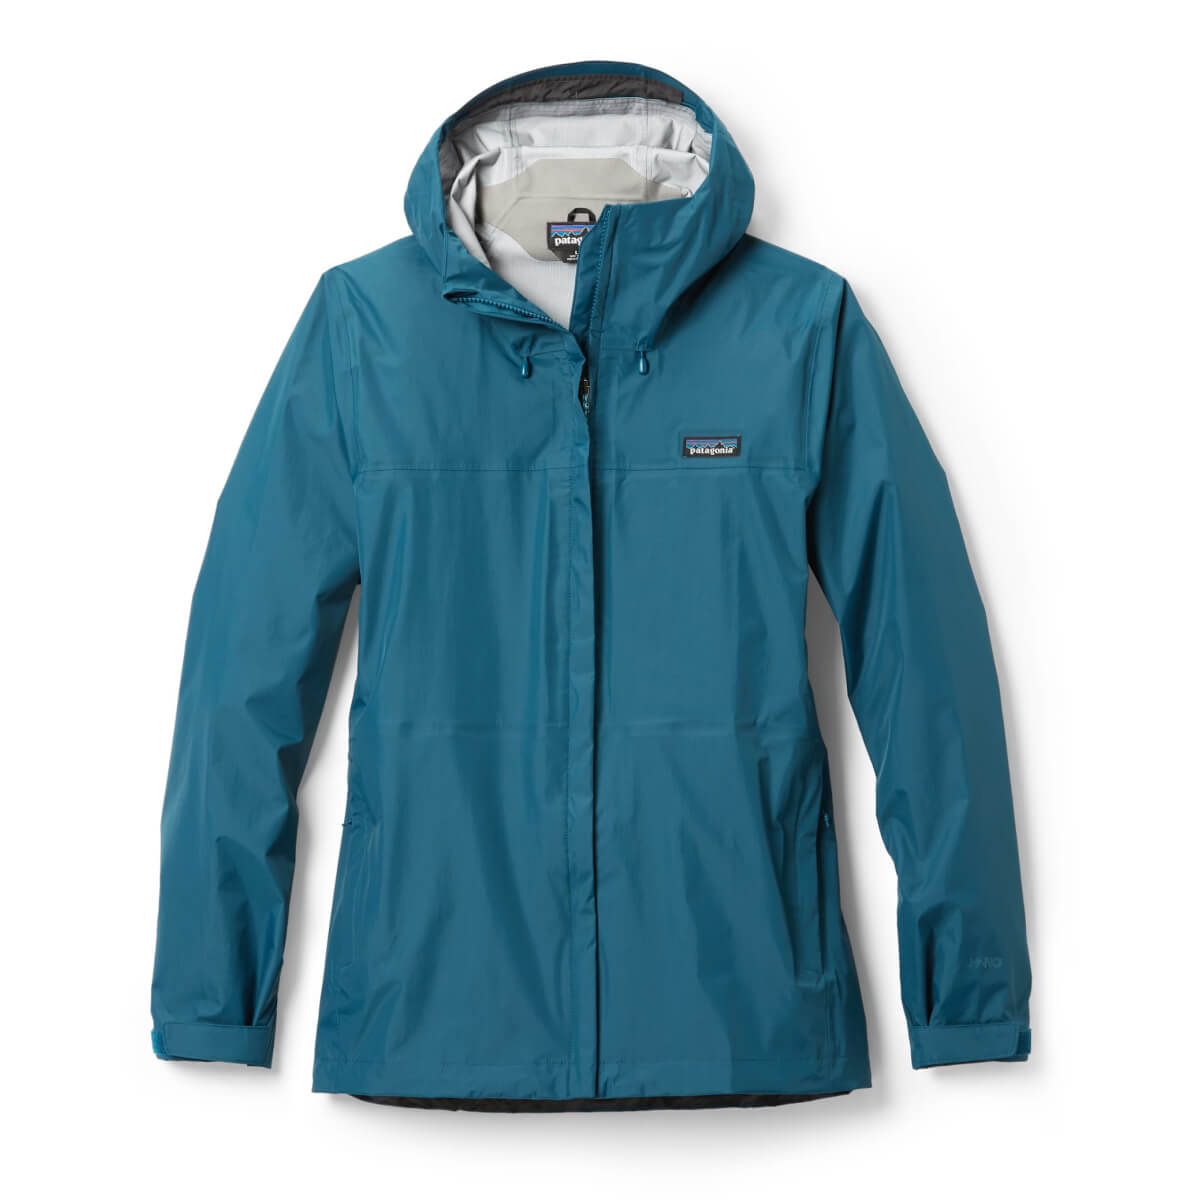 Patagonia torrentshell 3L rain jacket hiking gift idea